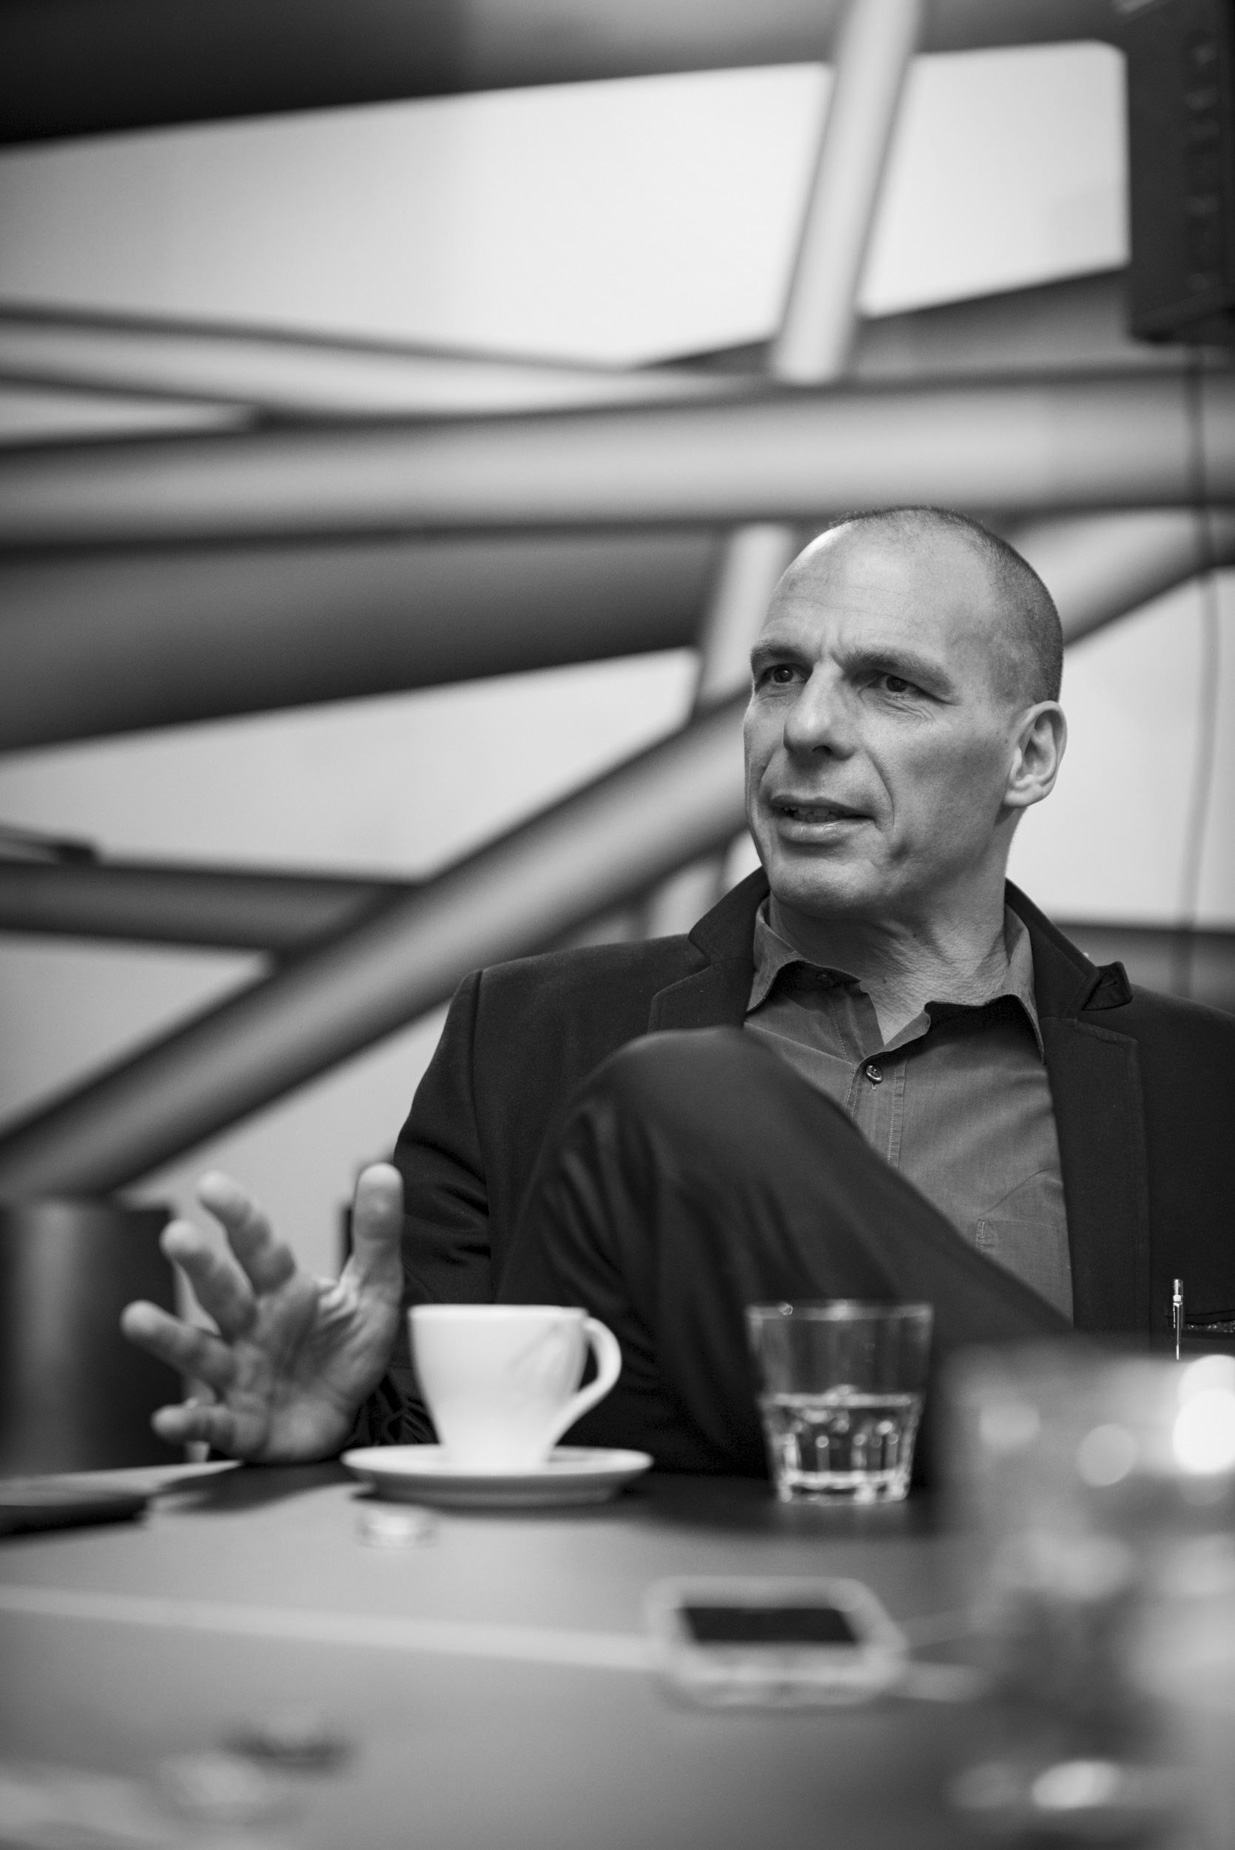 05.11.2015, Wien: Yanis Varoufakis im Cafe Korb.